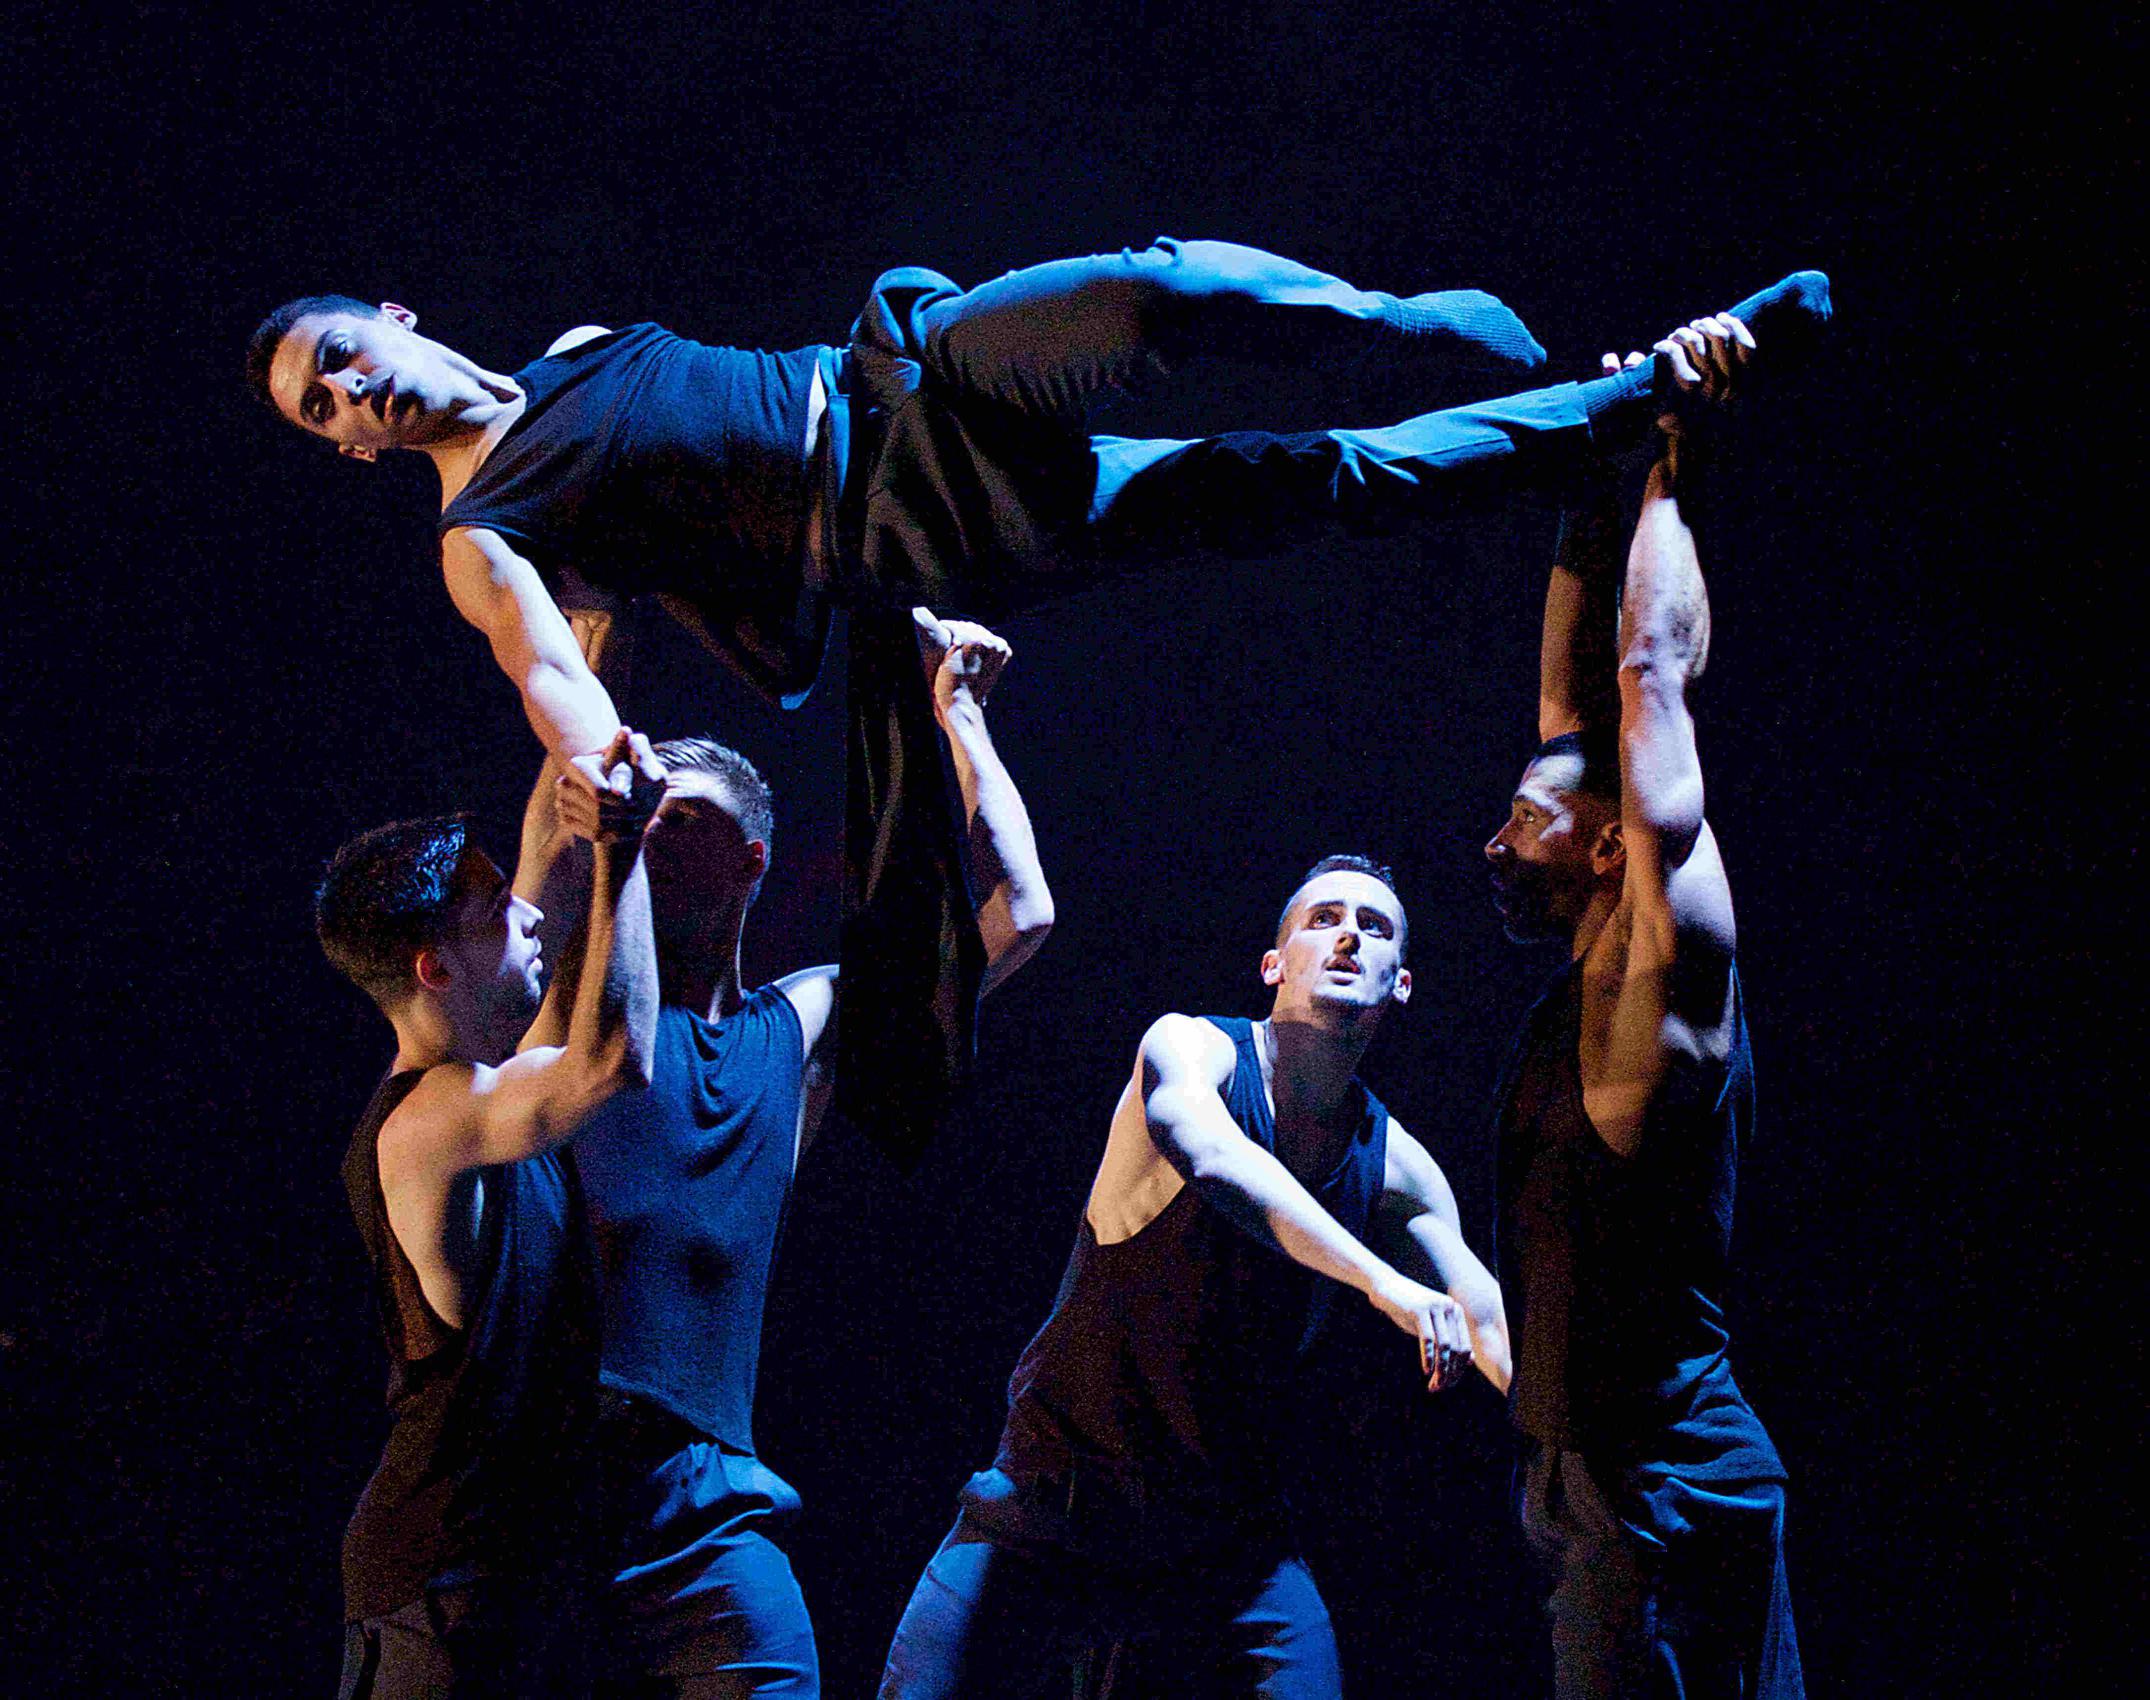 BalletBoys The Talent 2014 in Kristen McNally's MeTheus